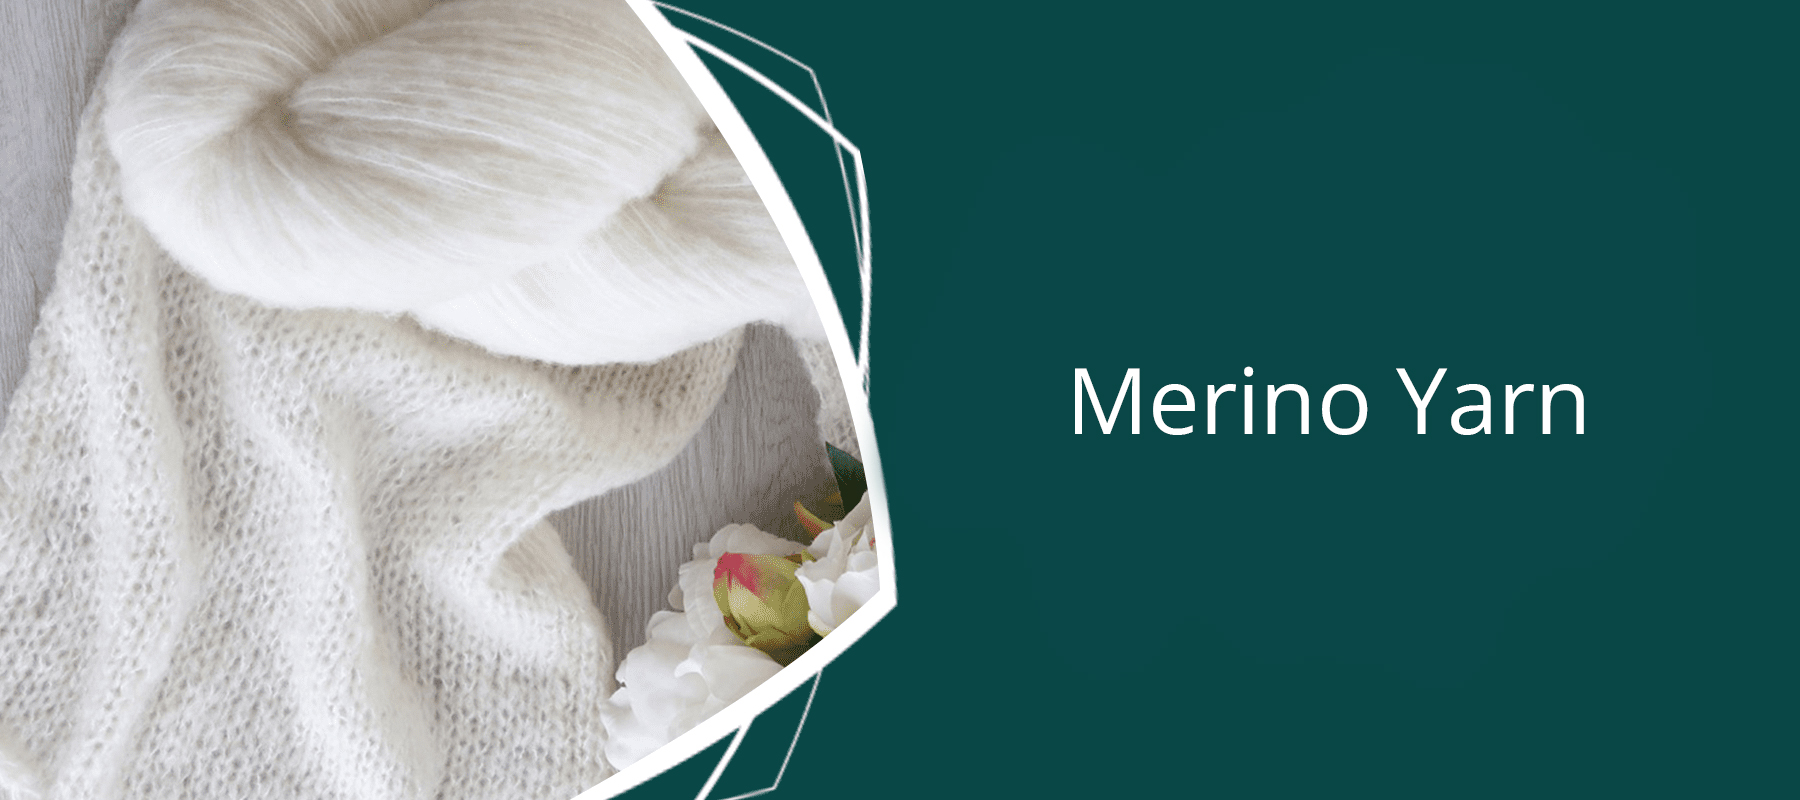 Merino Yarn Australia: Knitting & Weaving Handicraft Art - Thread Collective Australia 